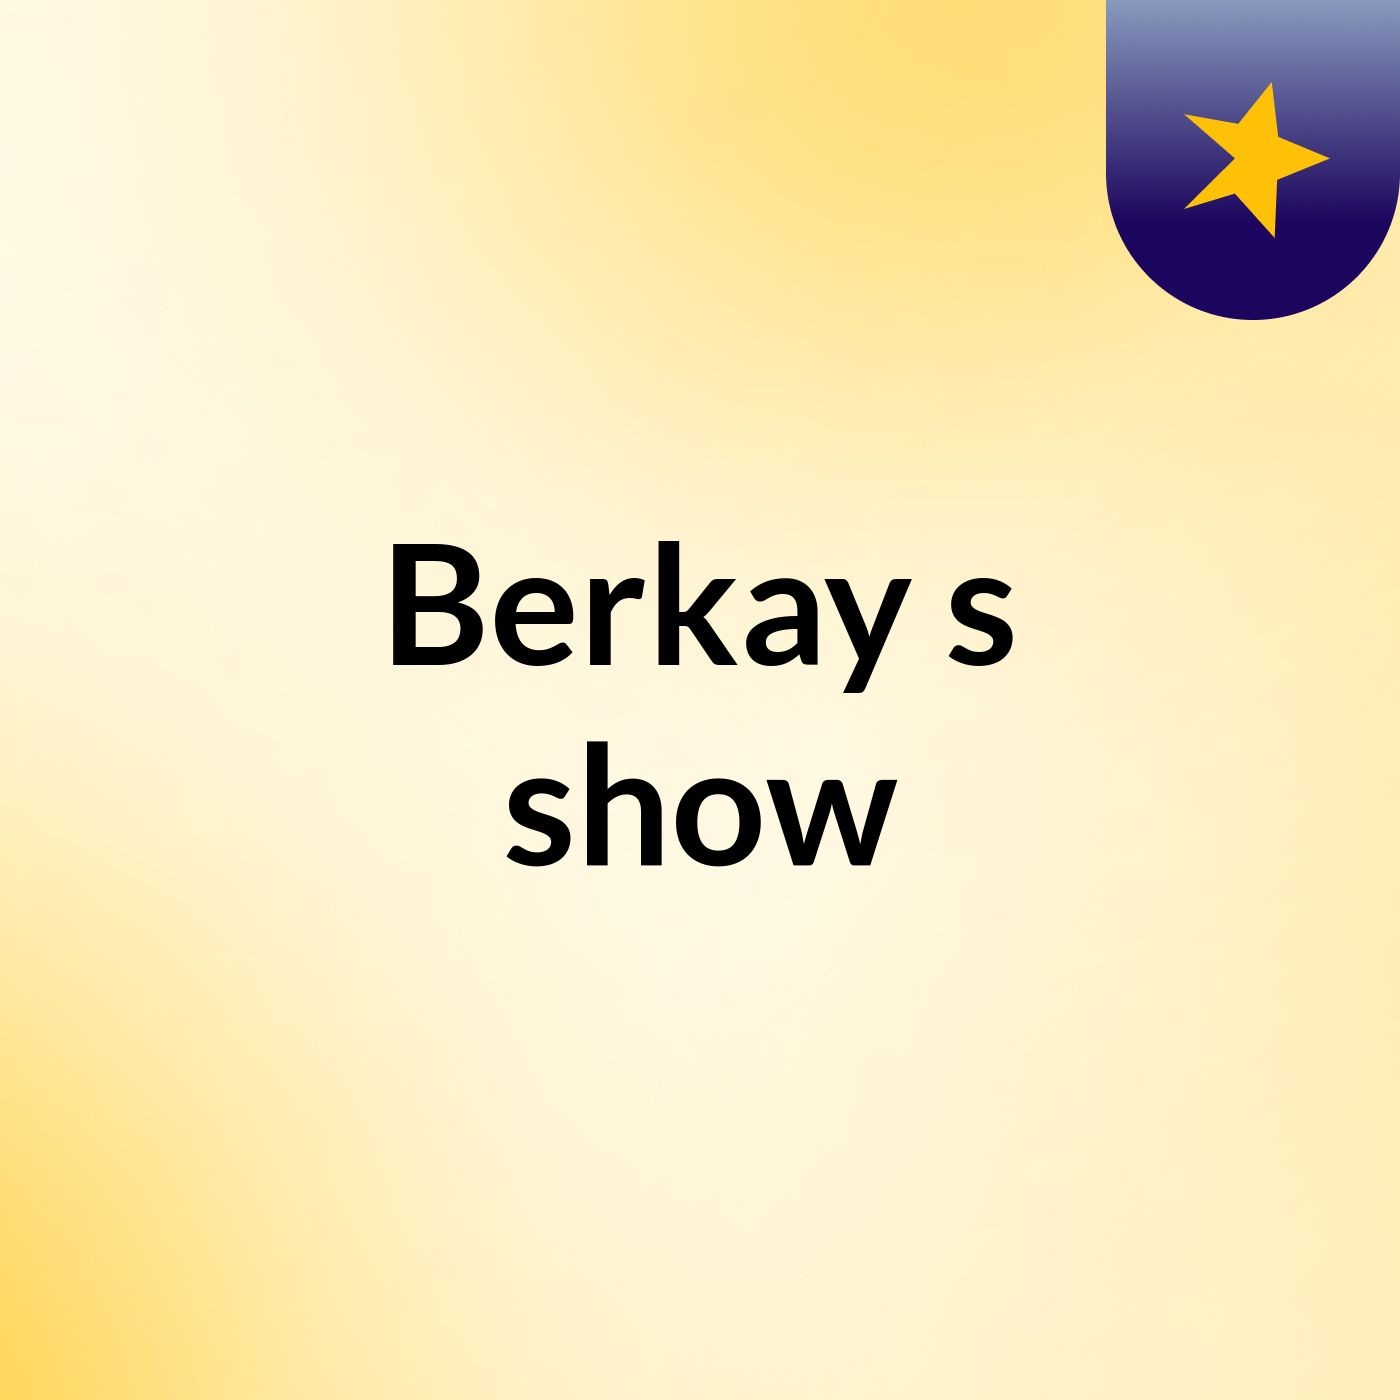 Berkay's show